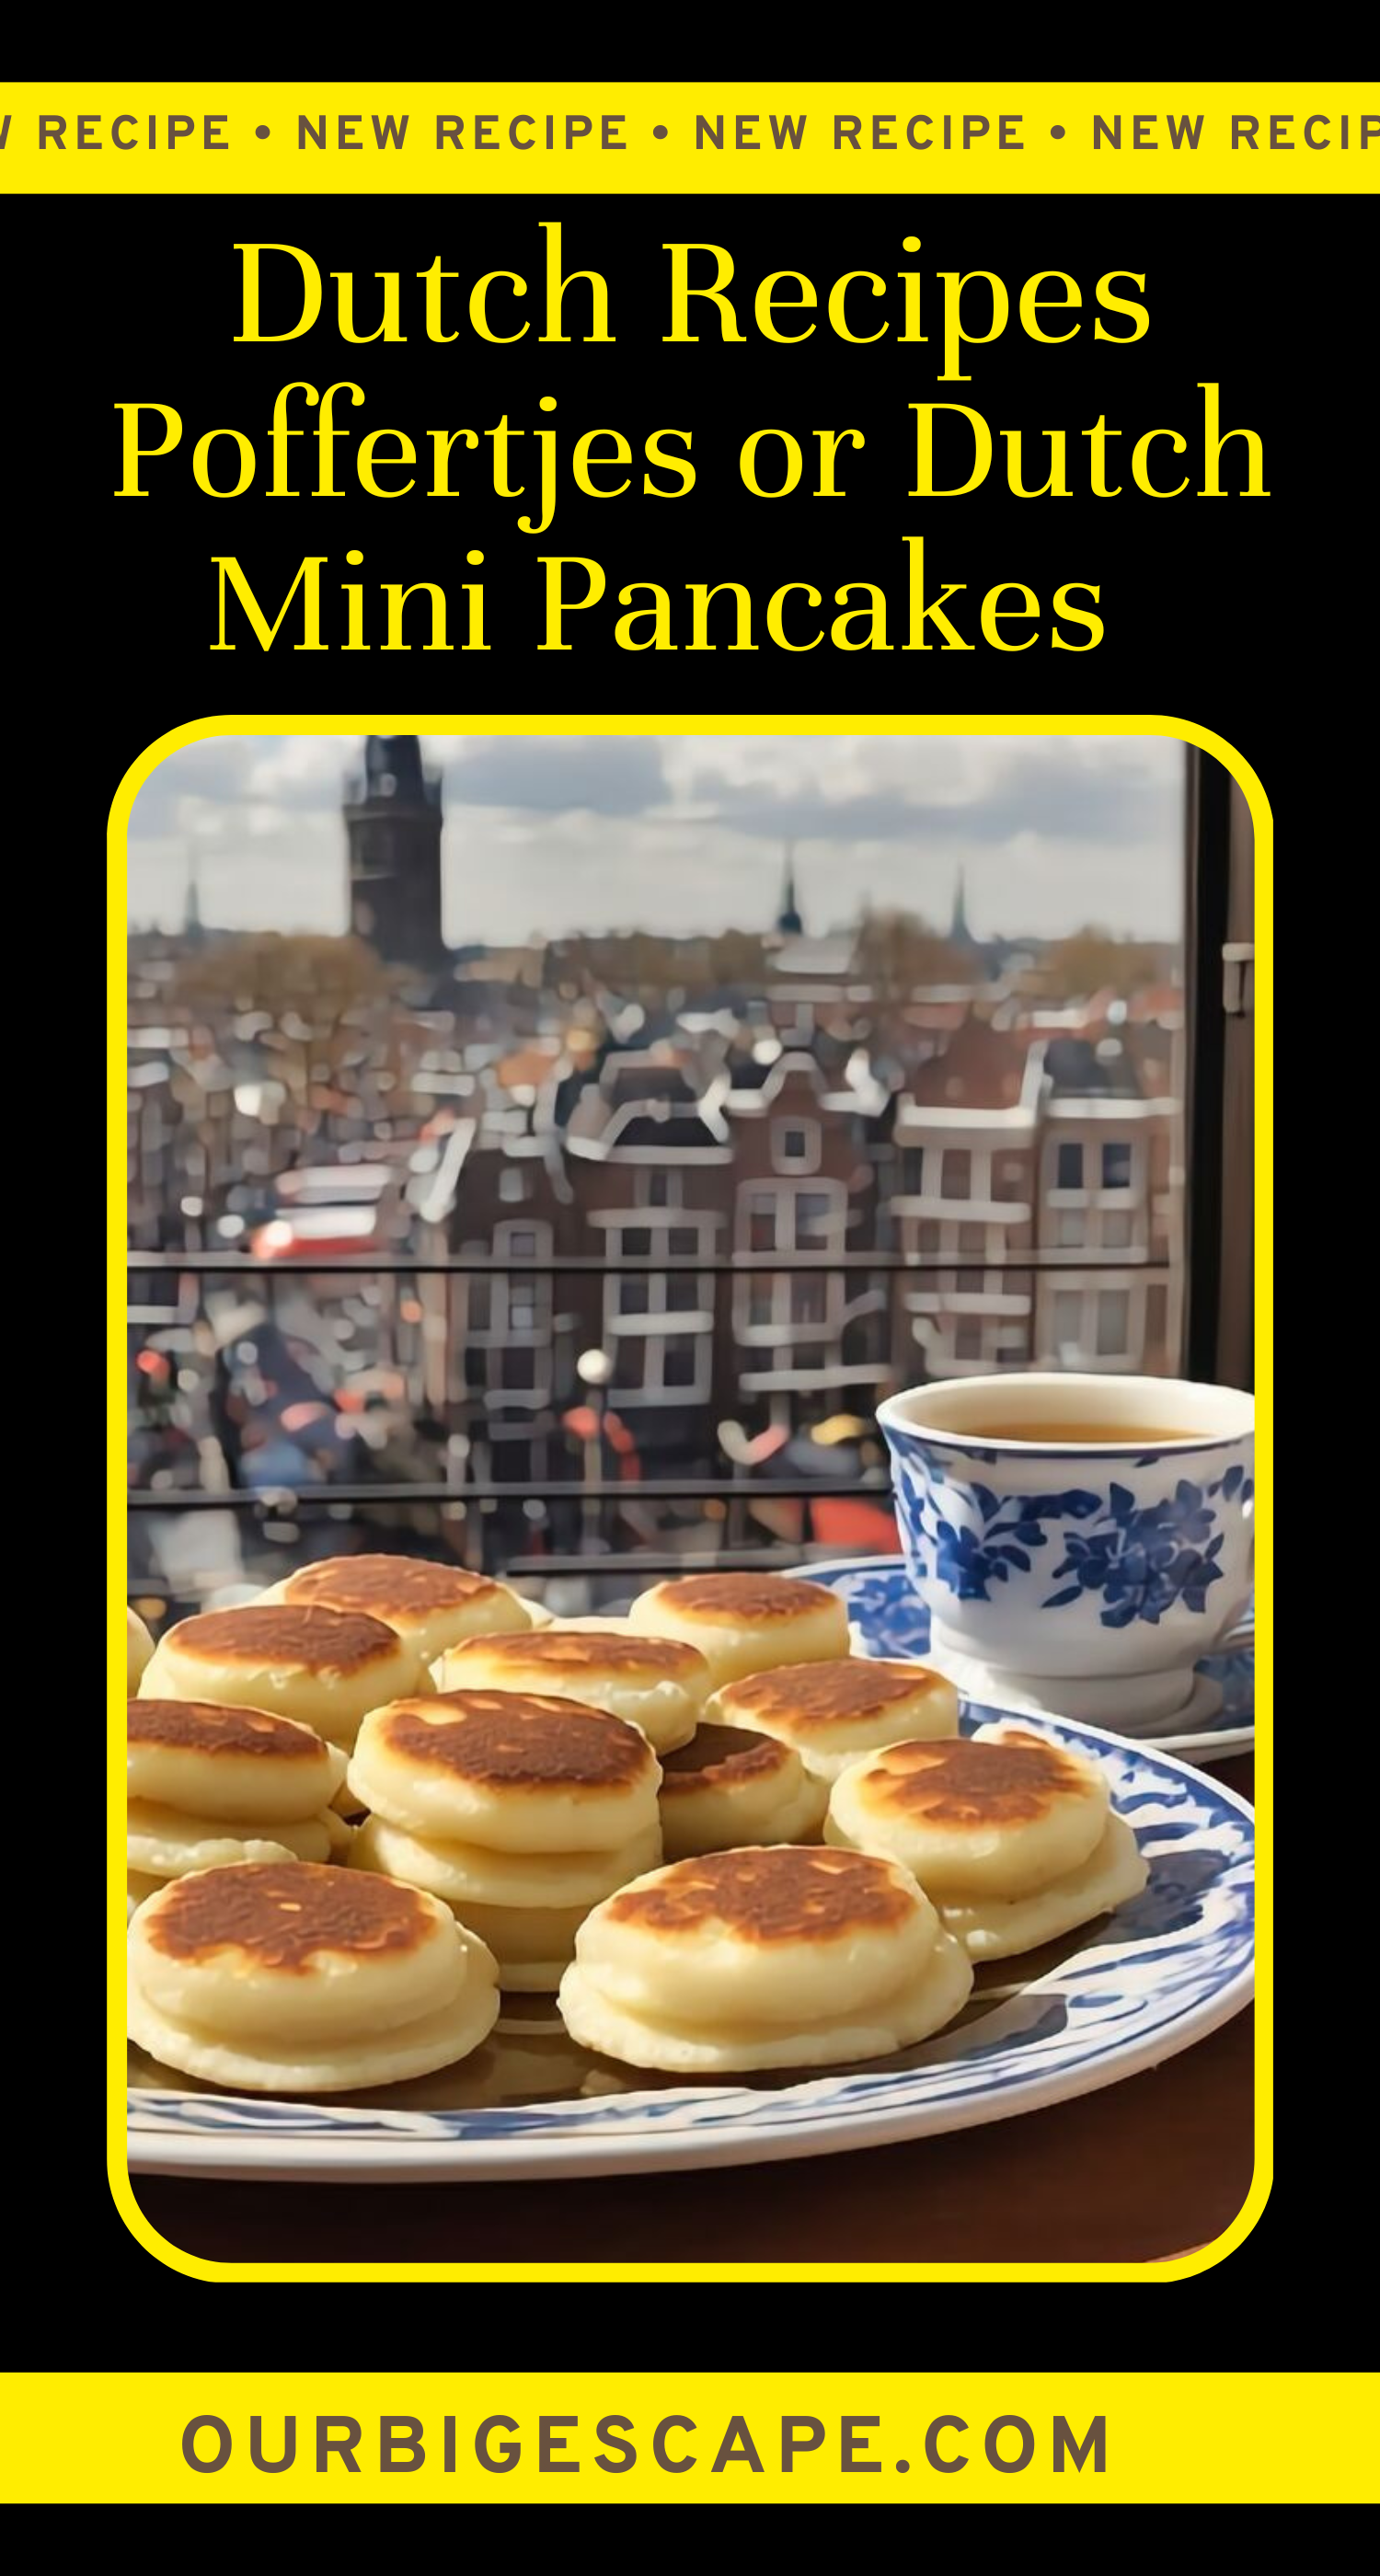 Poffertjes or Dutch Mini Pancakes